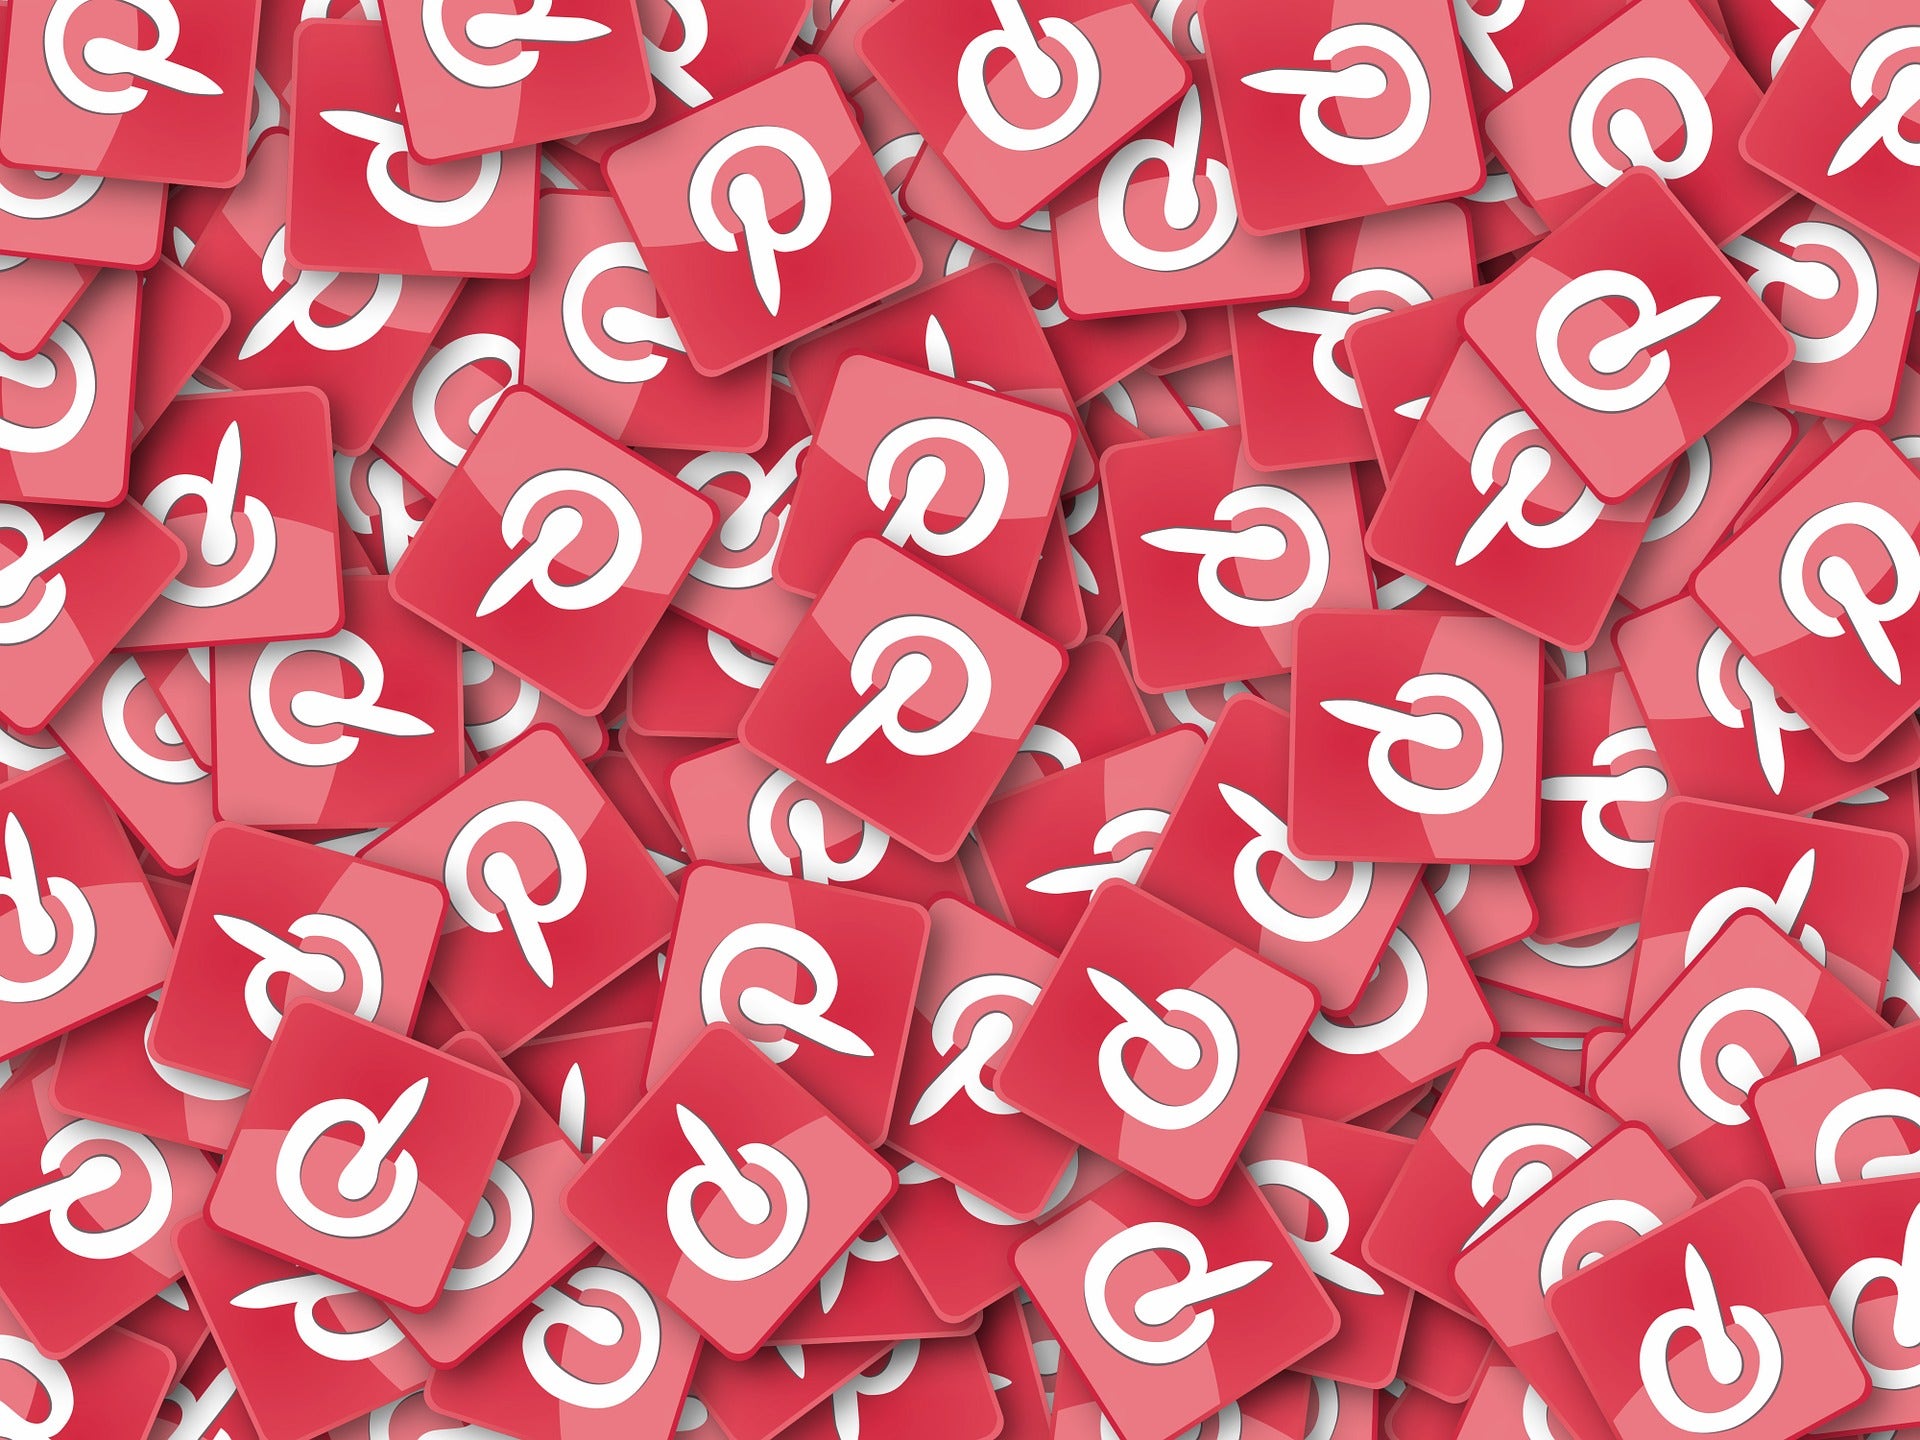 Pinterest Pares Back On 'Creator Rewards' Program Amid Macro Slowdown